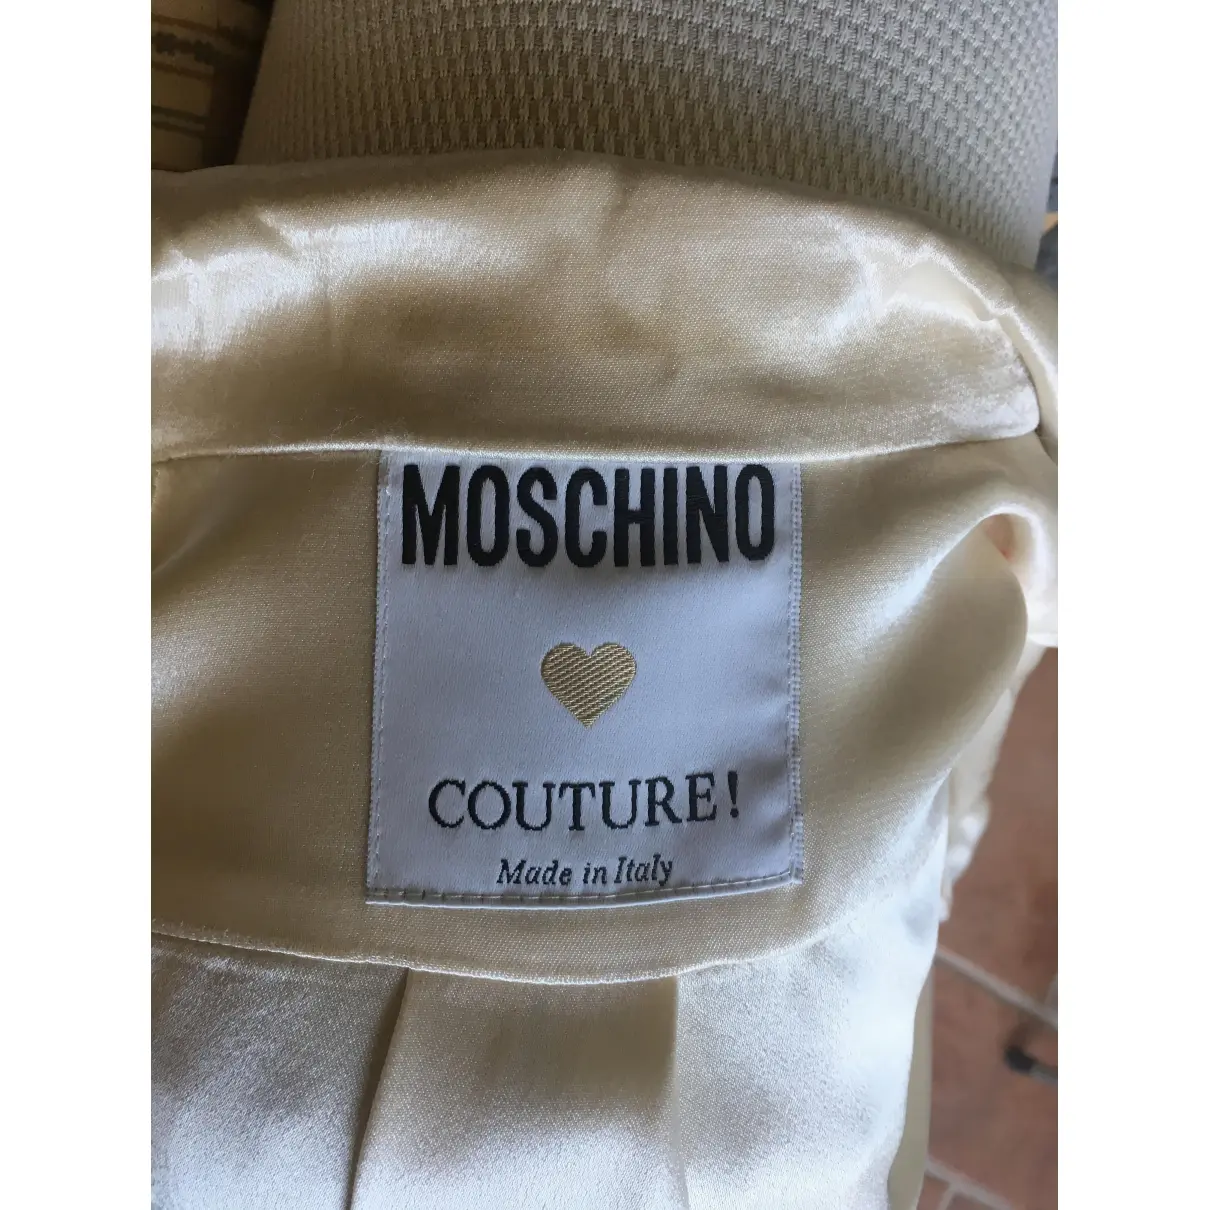 Buy Moschino Jacket online